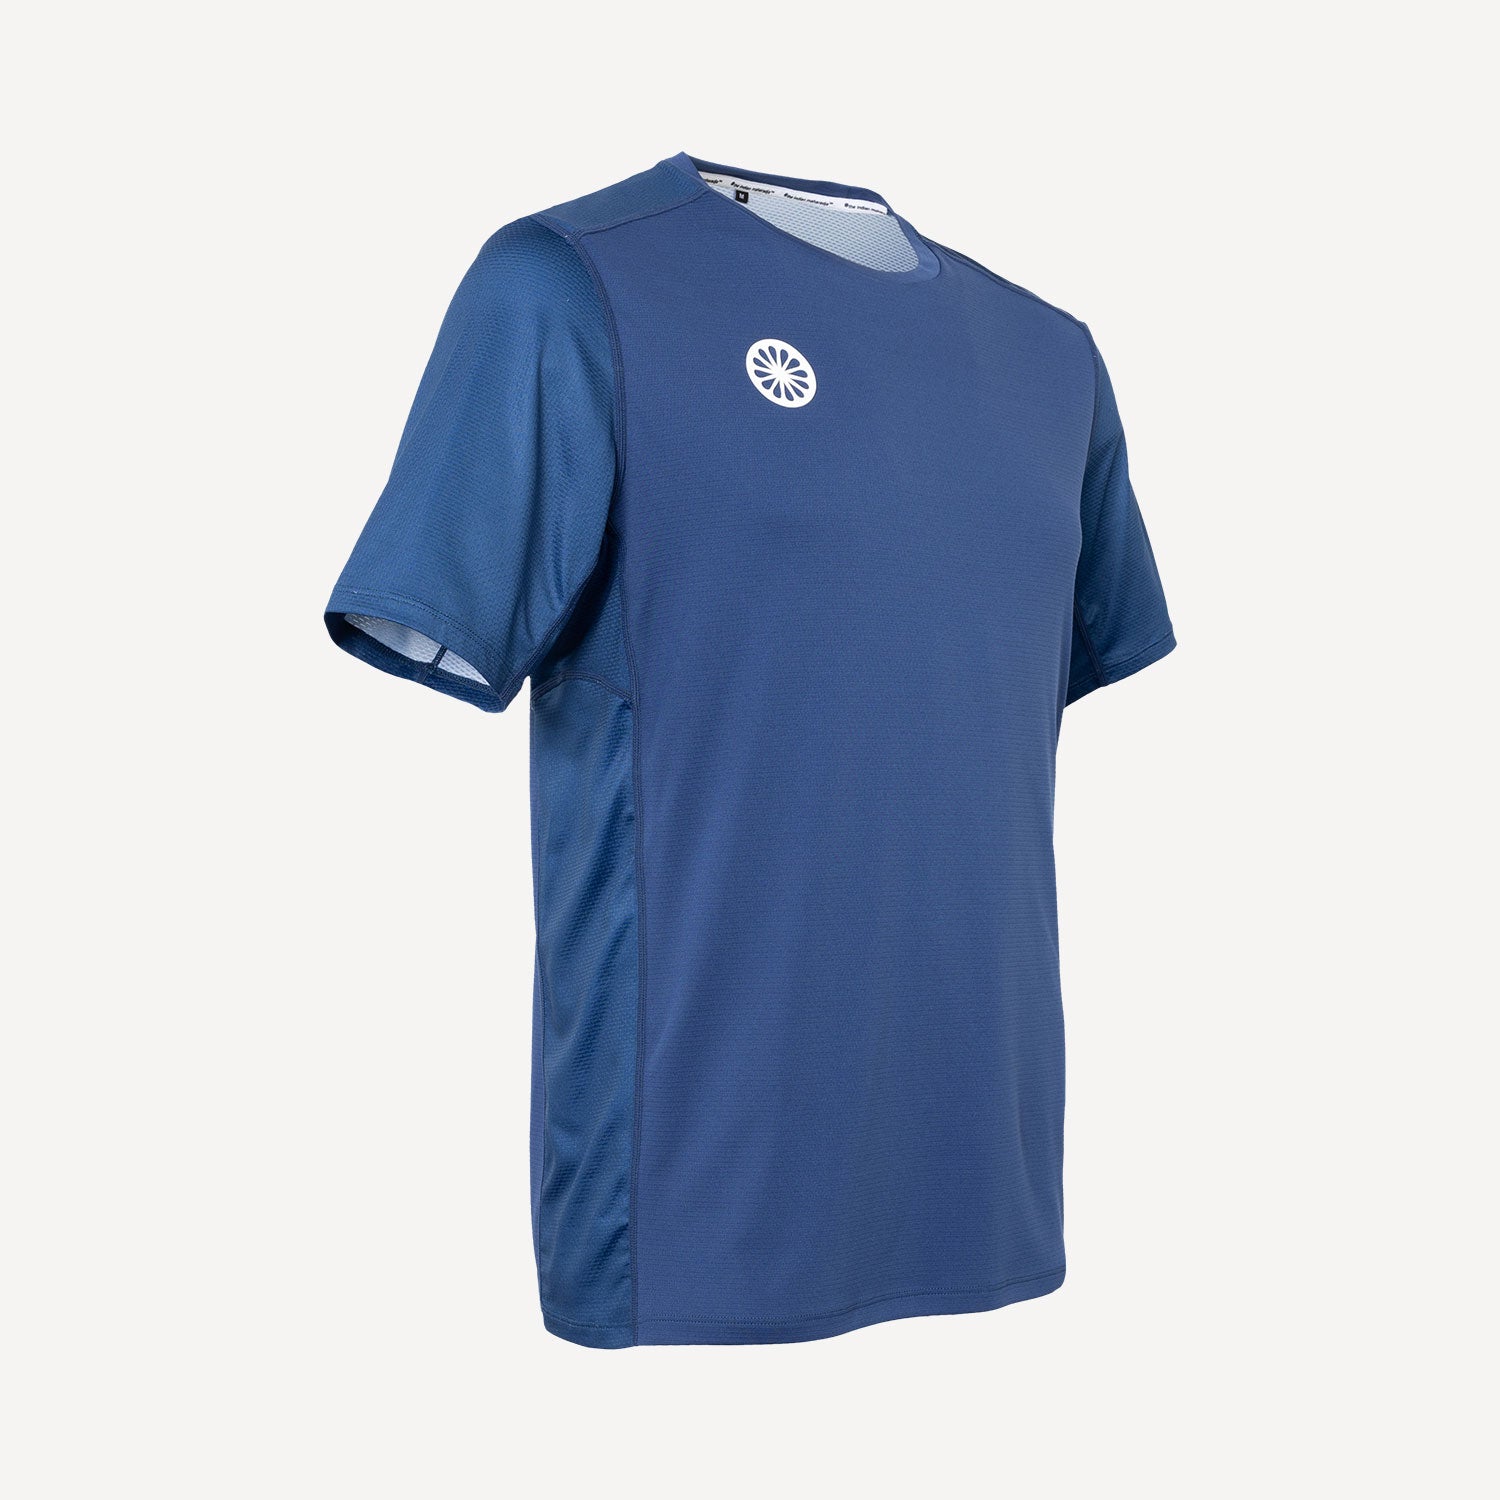 The Indian Maharadja Kadiri Men's Agility Tennis Shirt - Blue (3)